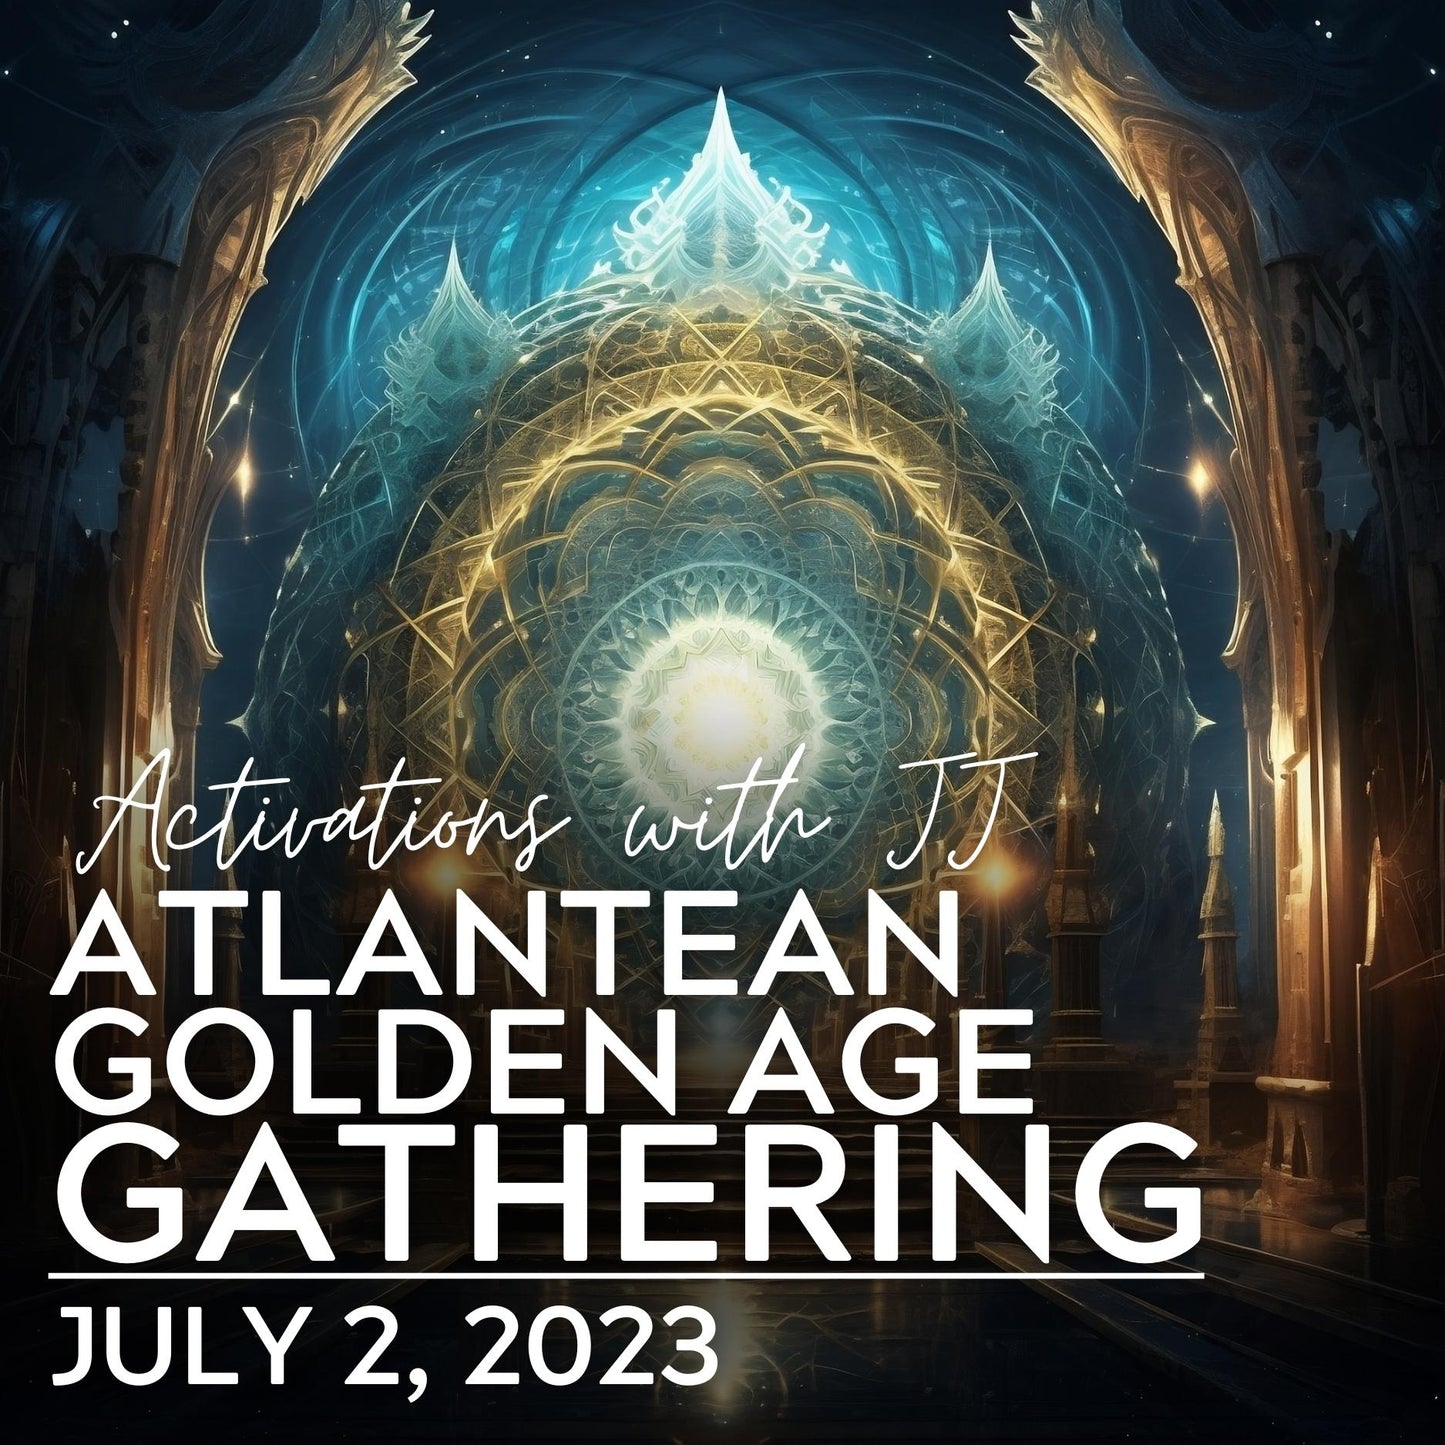 Atlantean Golden Age Gathering (MP3 Recording) | July 2, 2023